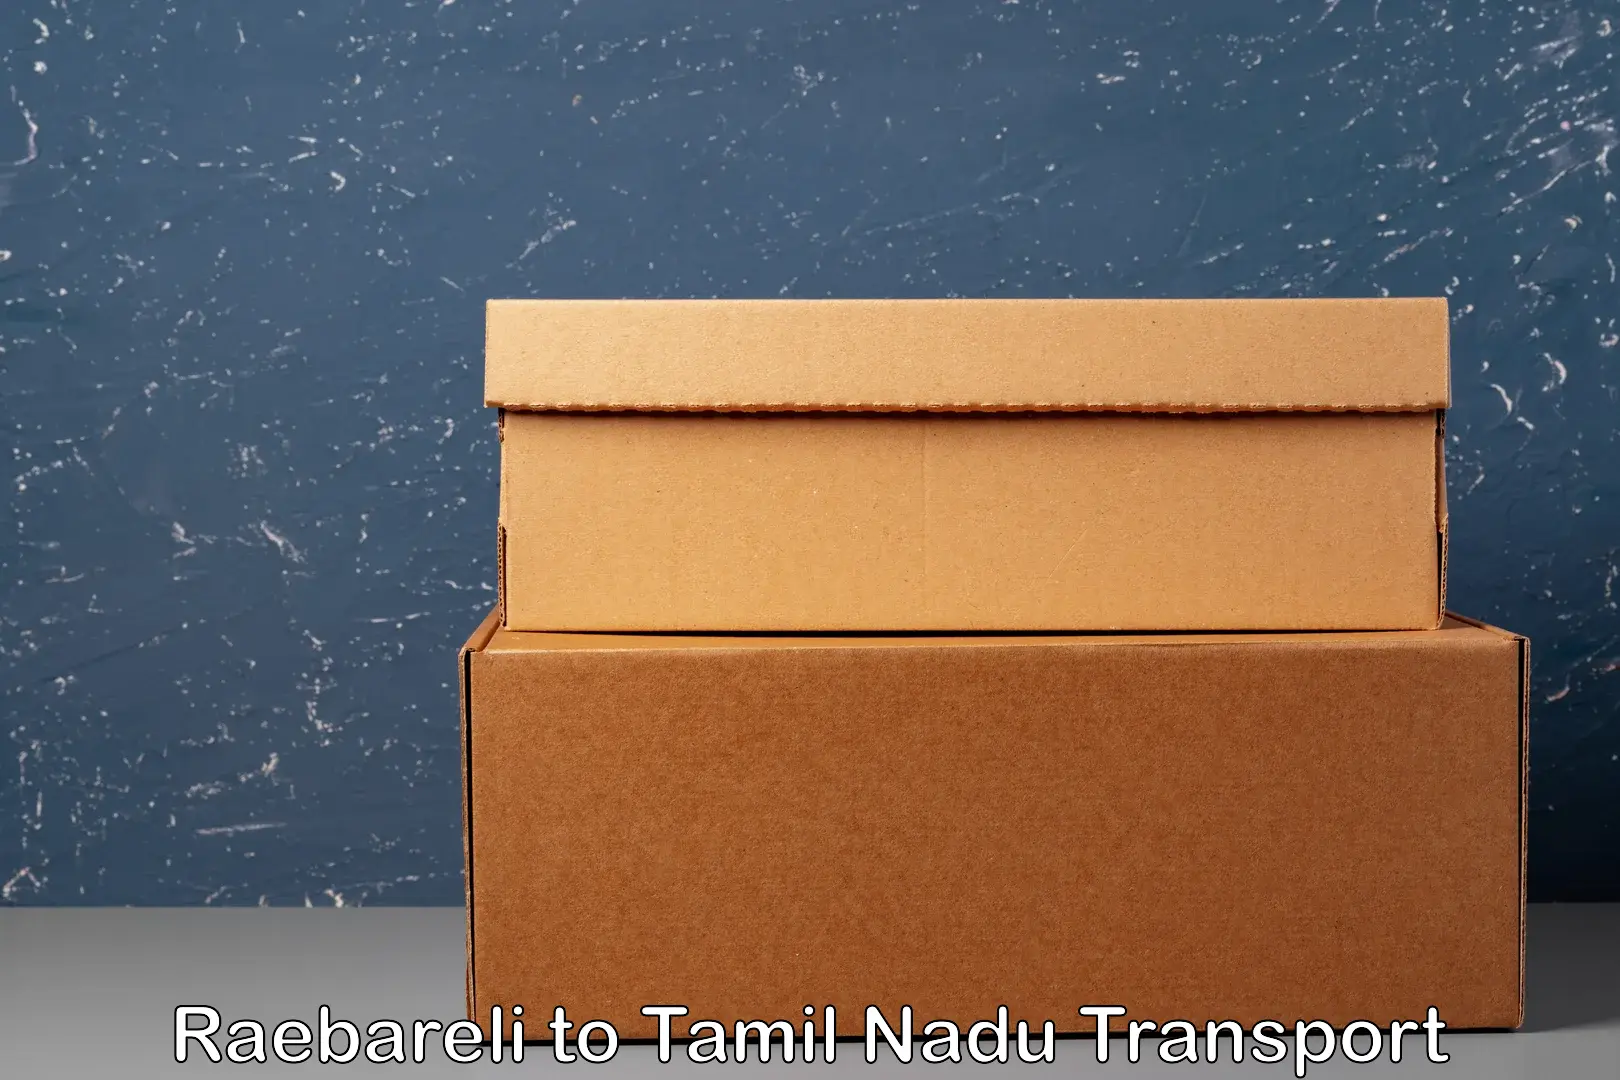 Truck transport companies in India Raebareli to Tamil Nadu